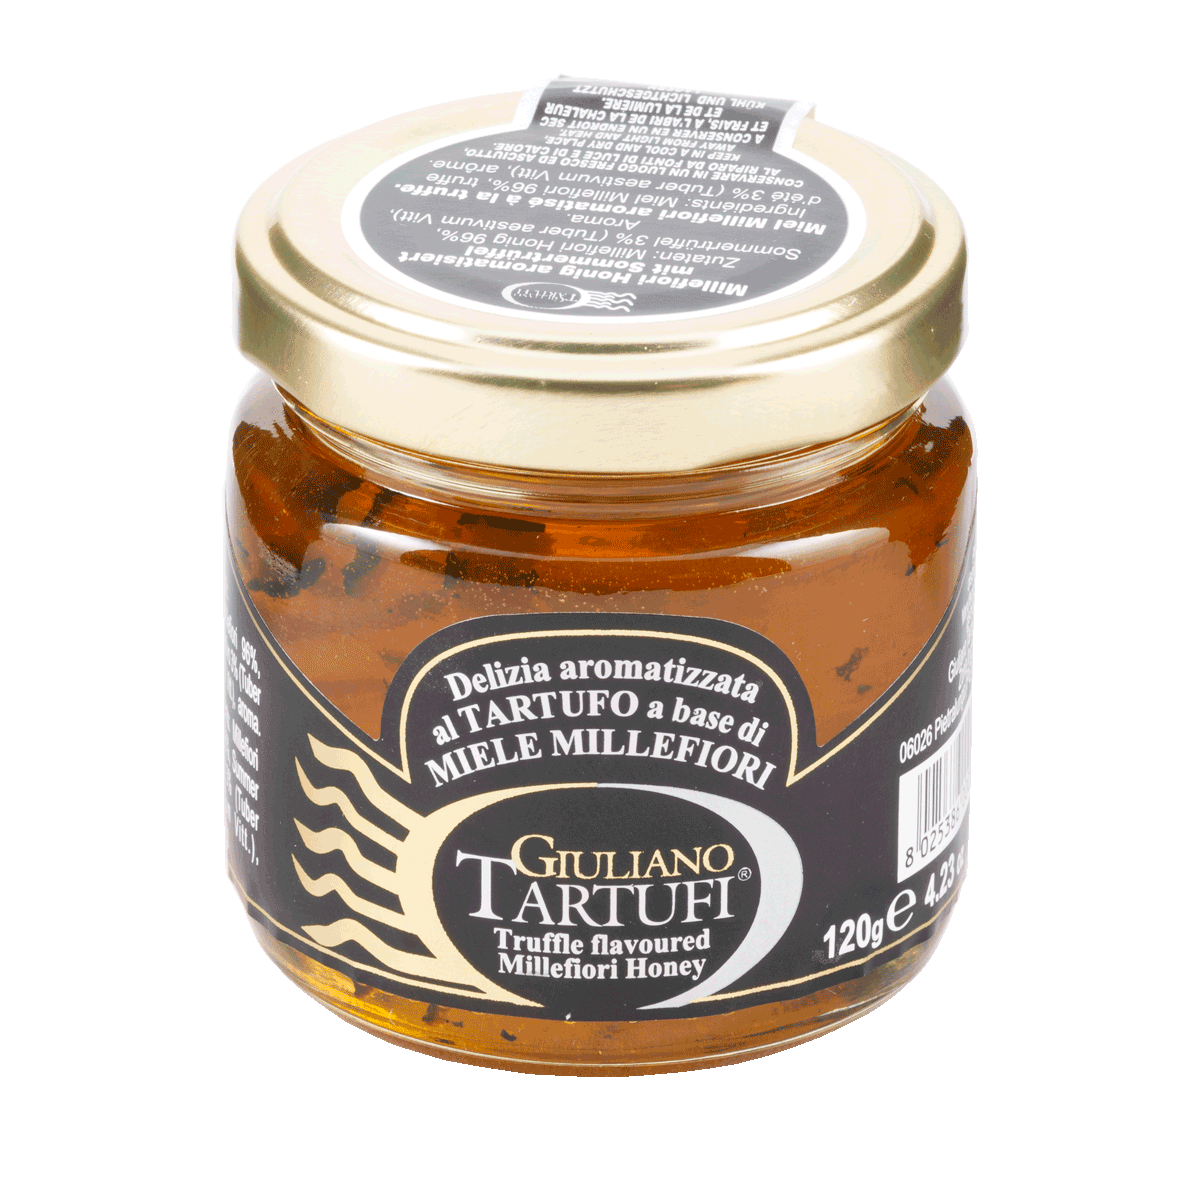 Millefiori Honey flavoured with summer truffle 120g glass jar, Giulian